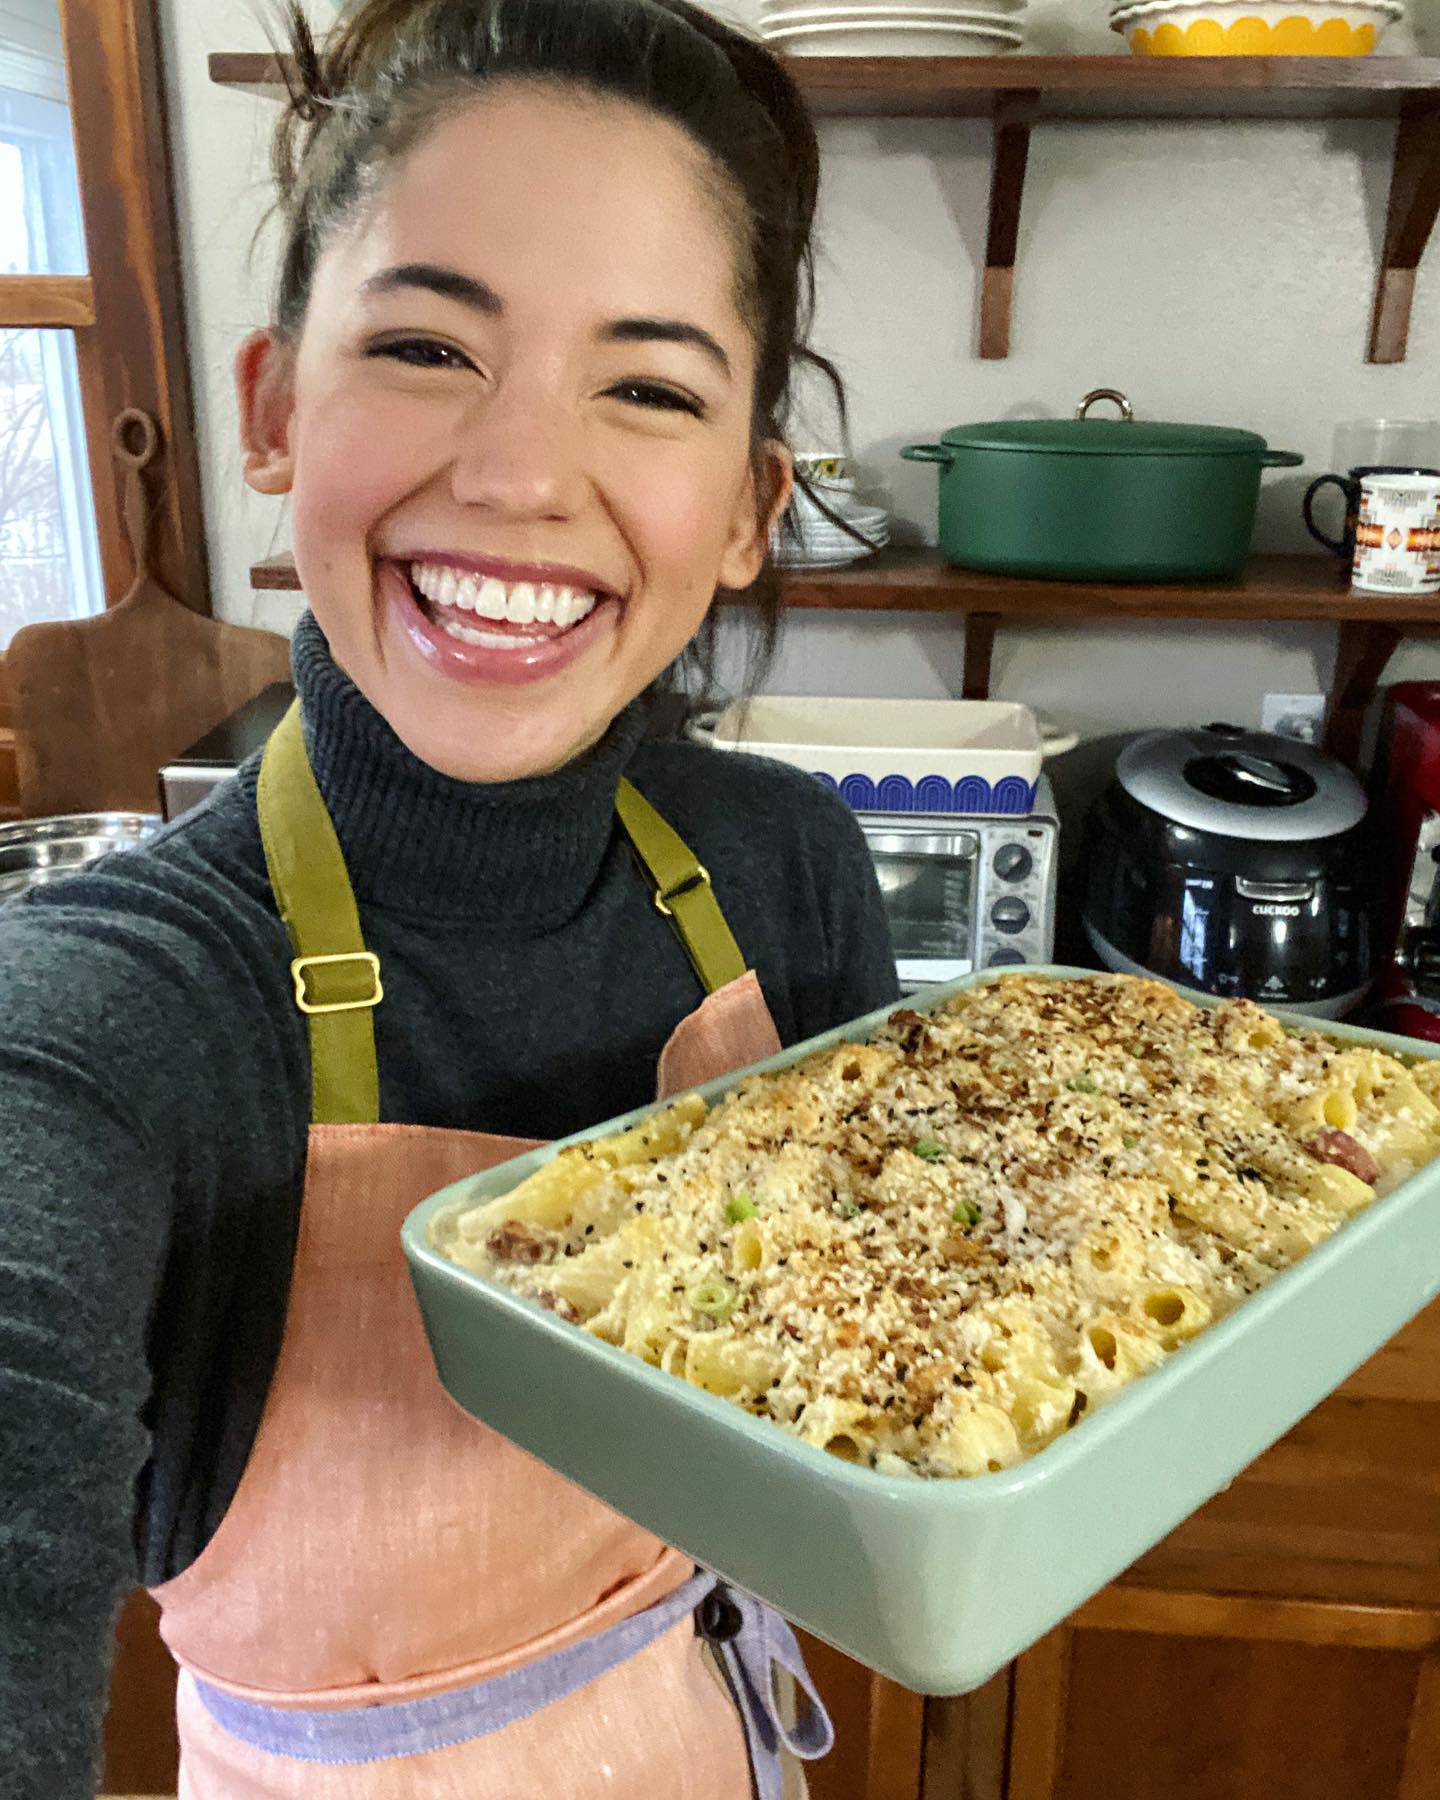 Food Network star Molly Yeh shares her 7 favorite kitchen essentials